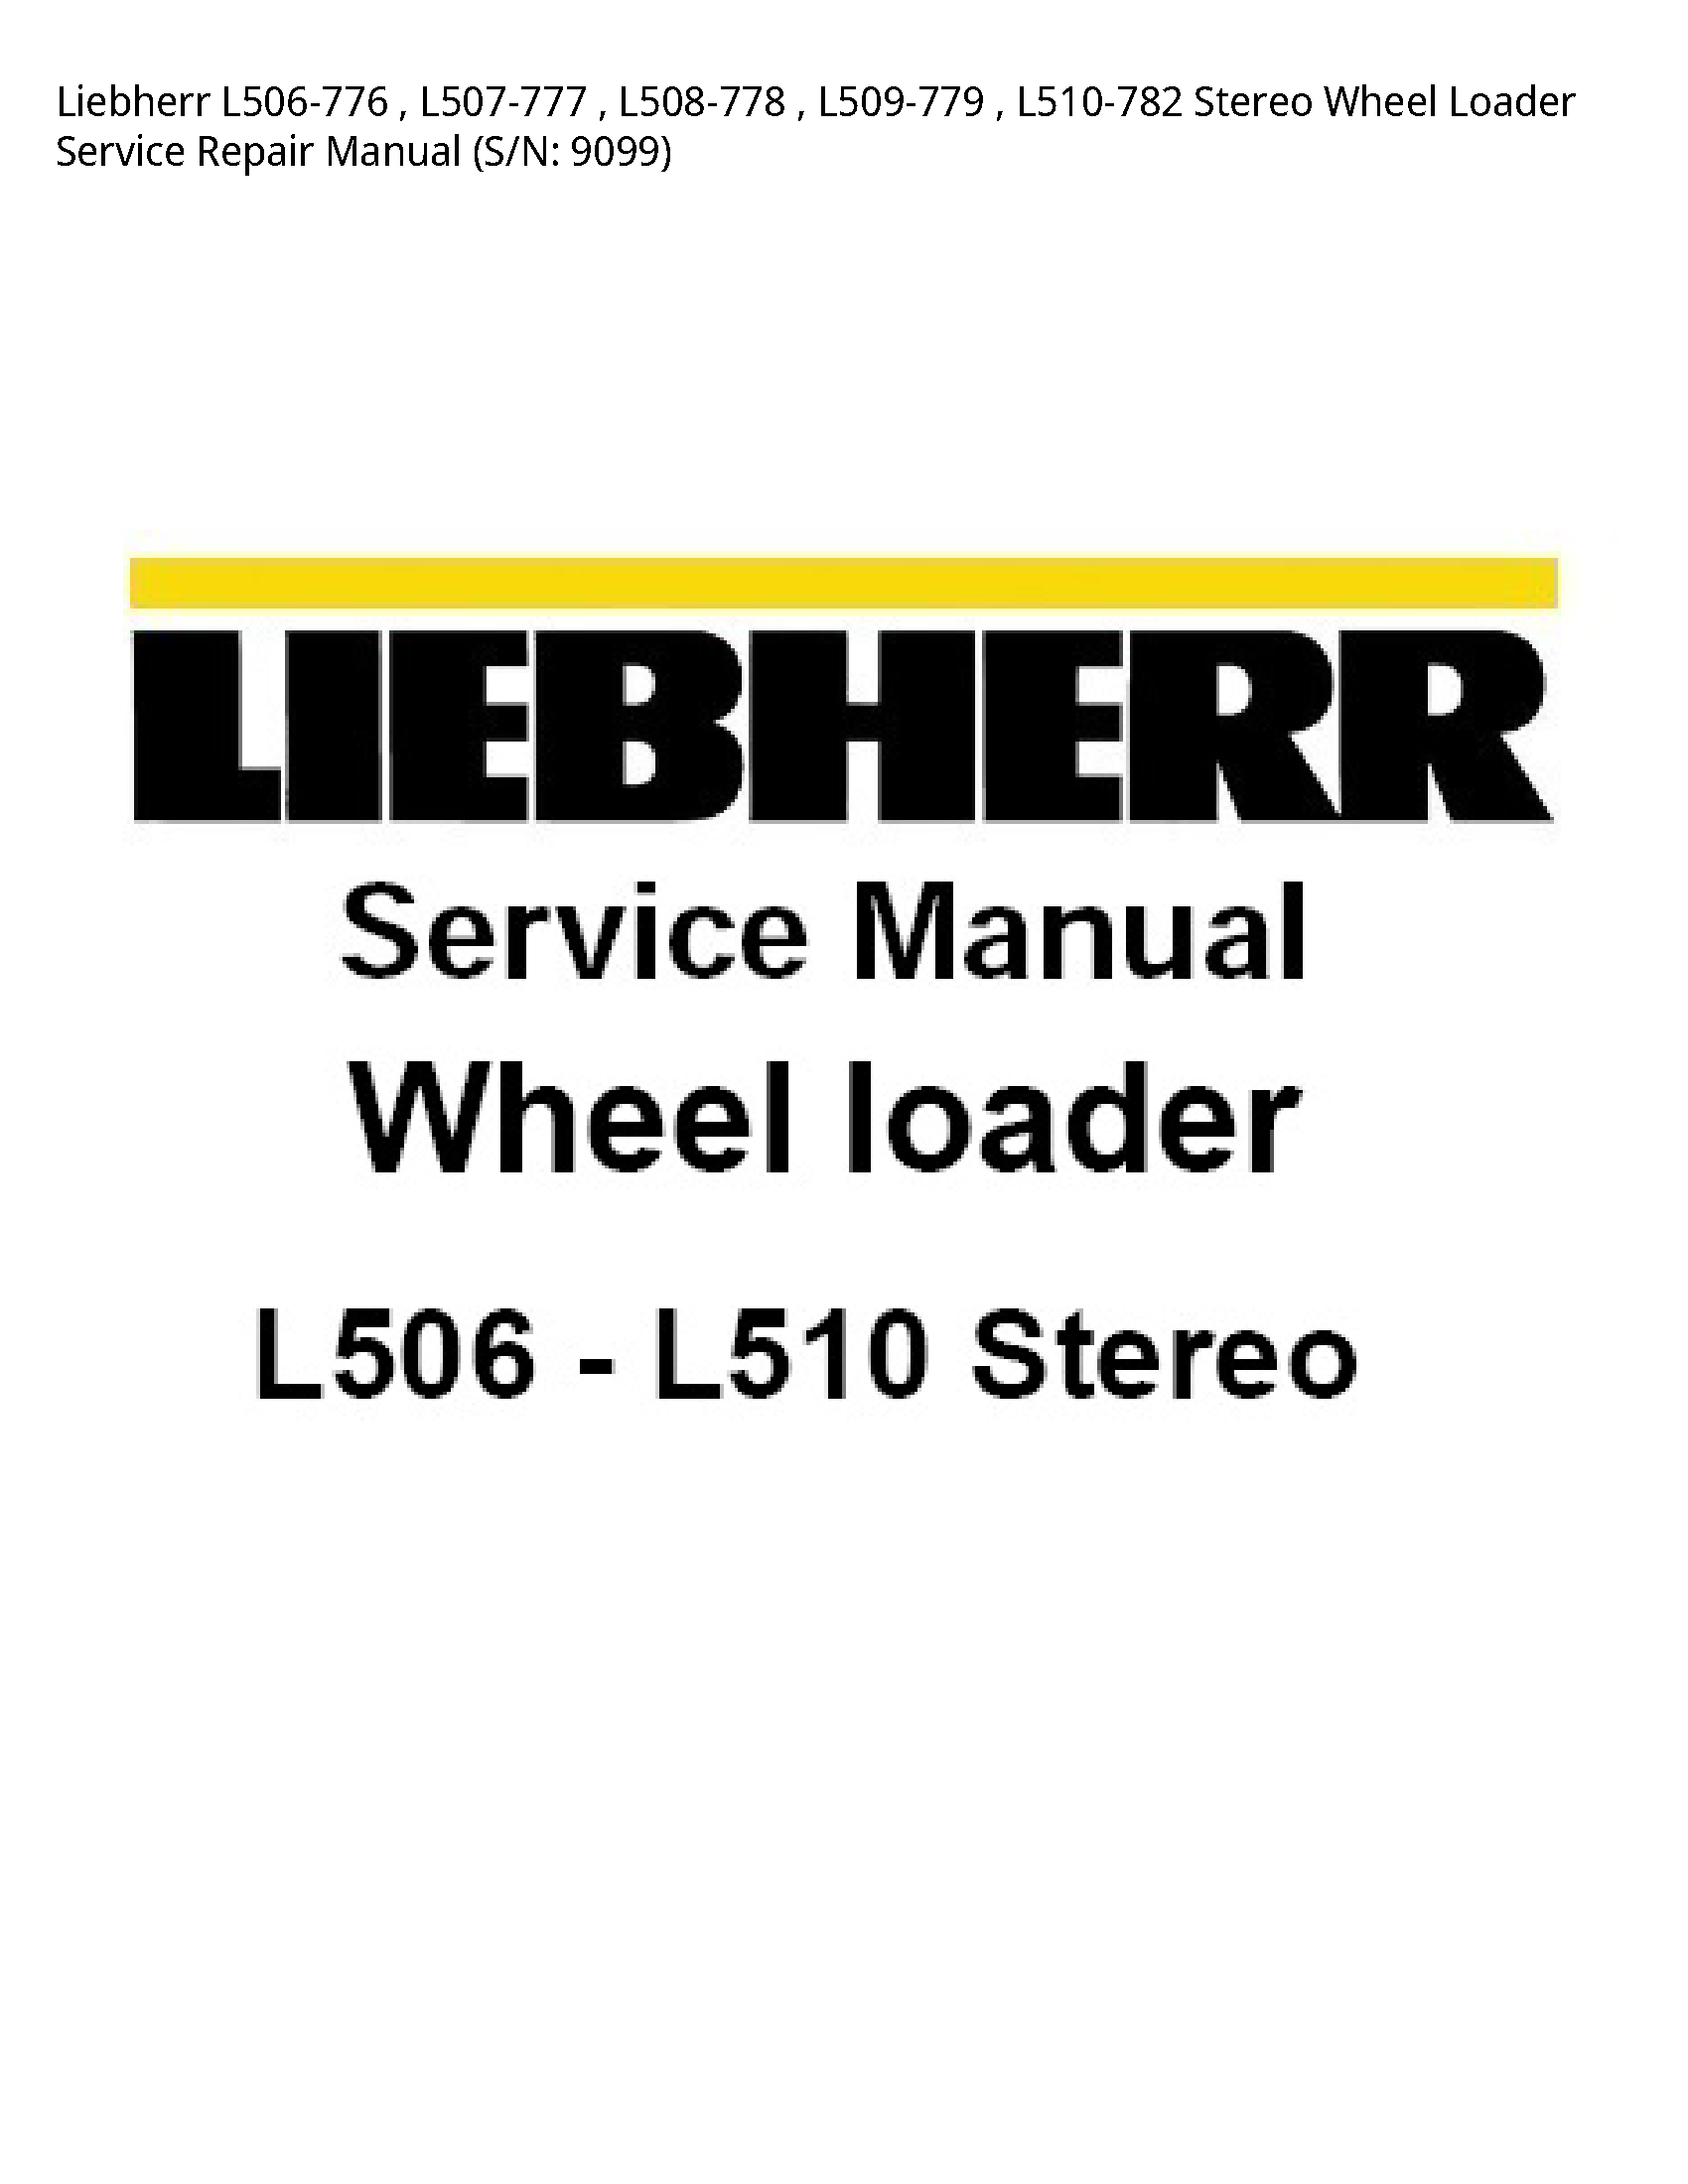 Liebherr L506-776 Stereo Wheel Loader manual